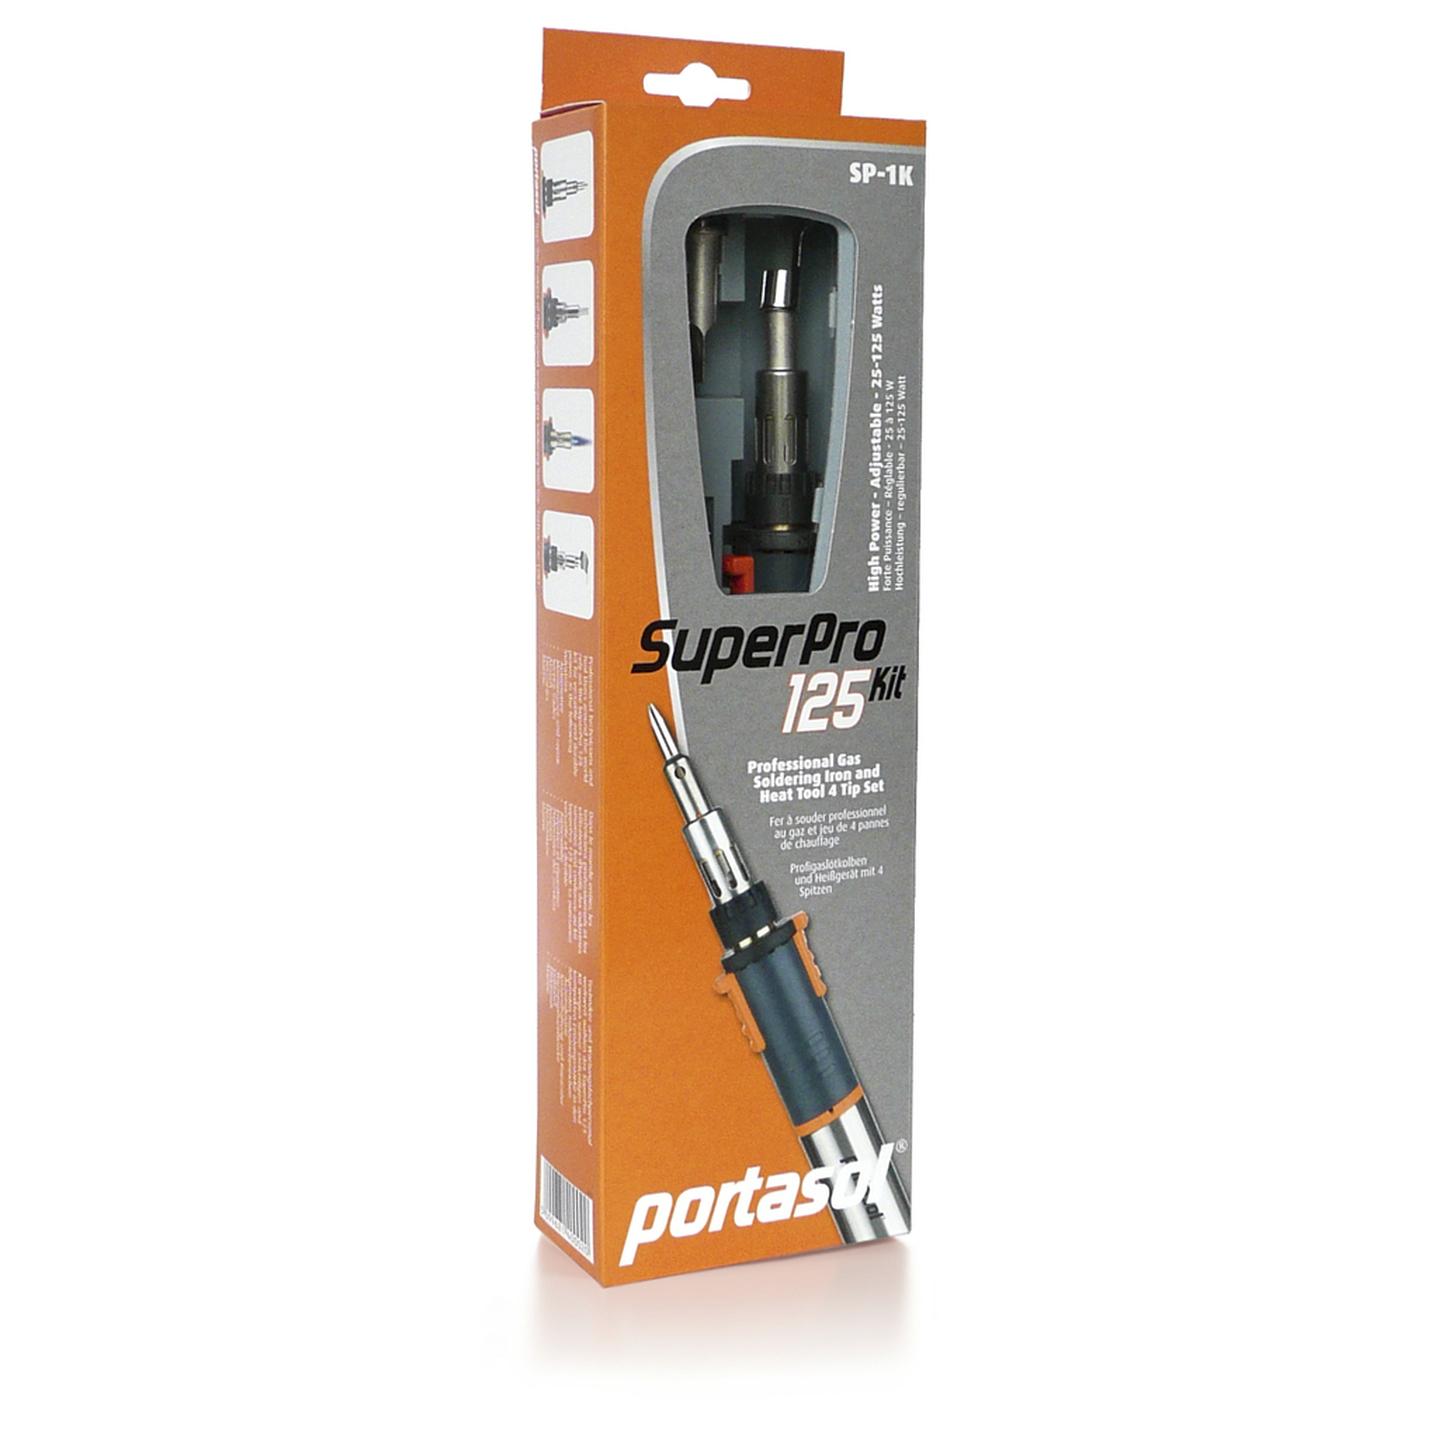 Portasol Super Pro Gas Soldering Tool Kit